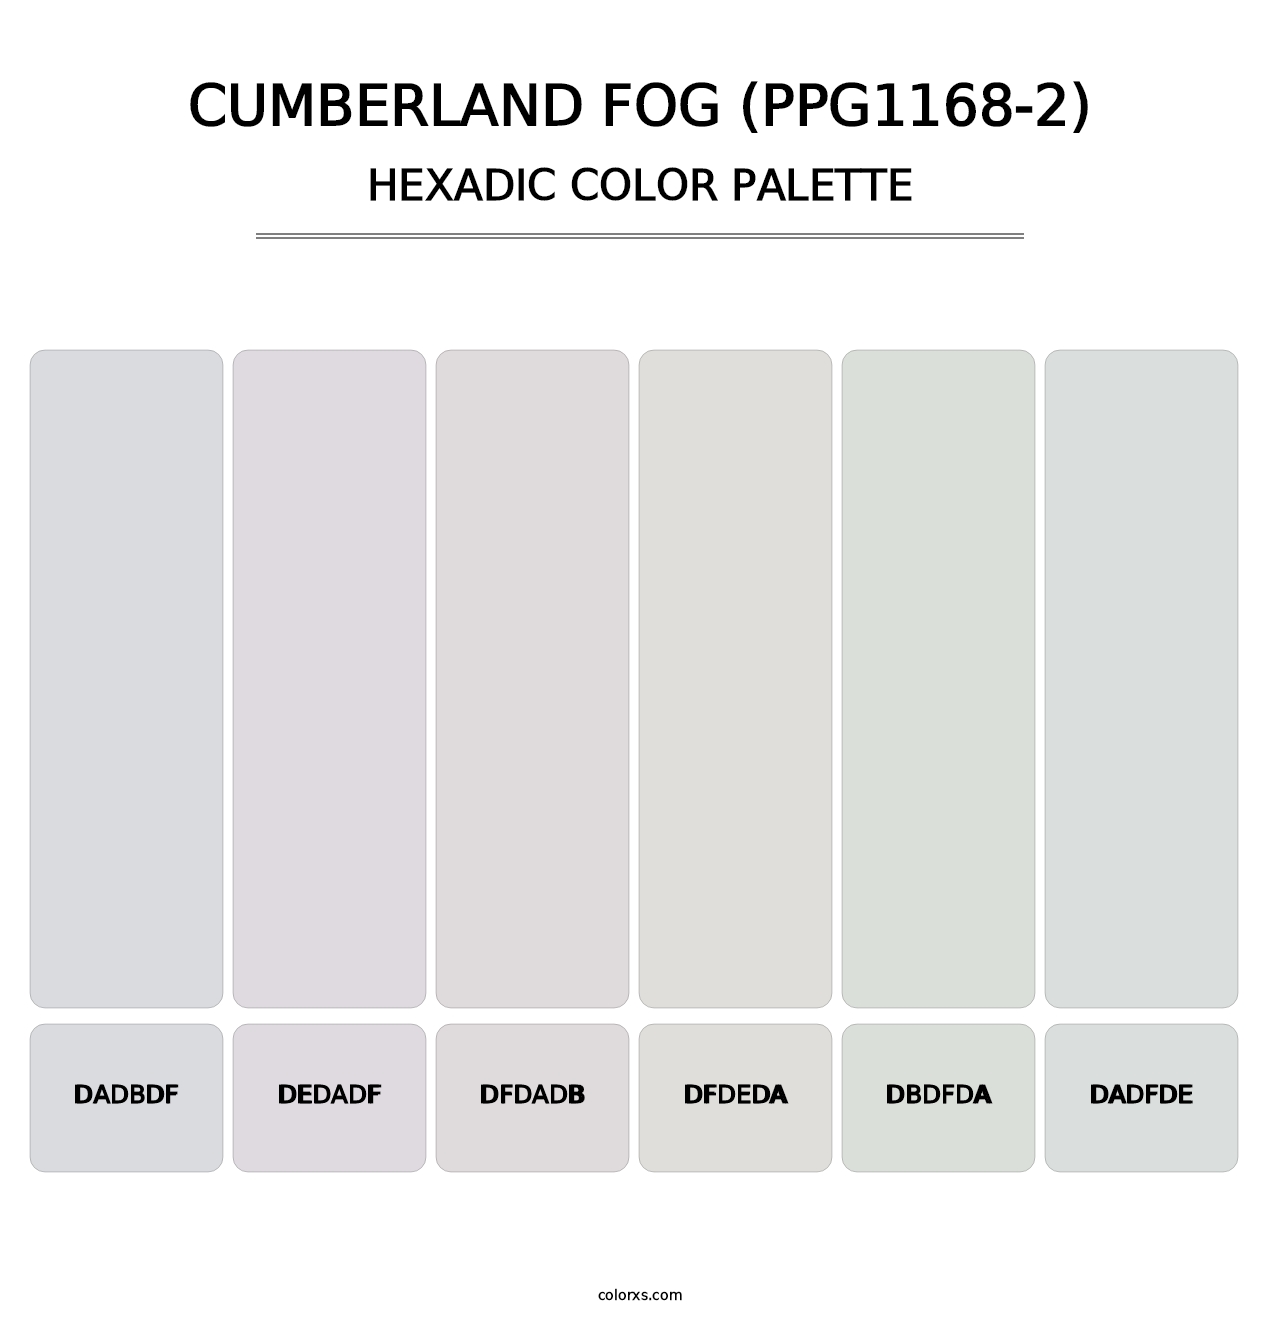 Cumberland Fog (PPG1168-2) - Hexadic Color Palette